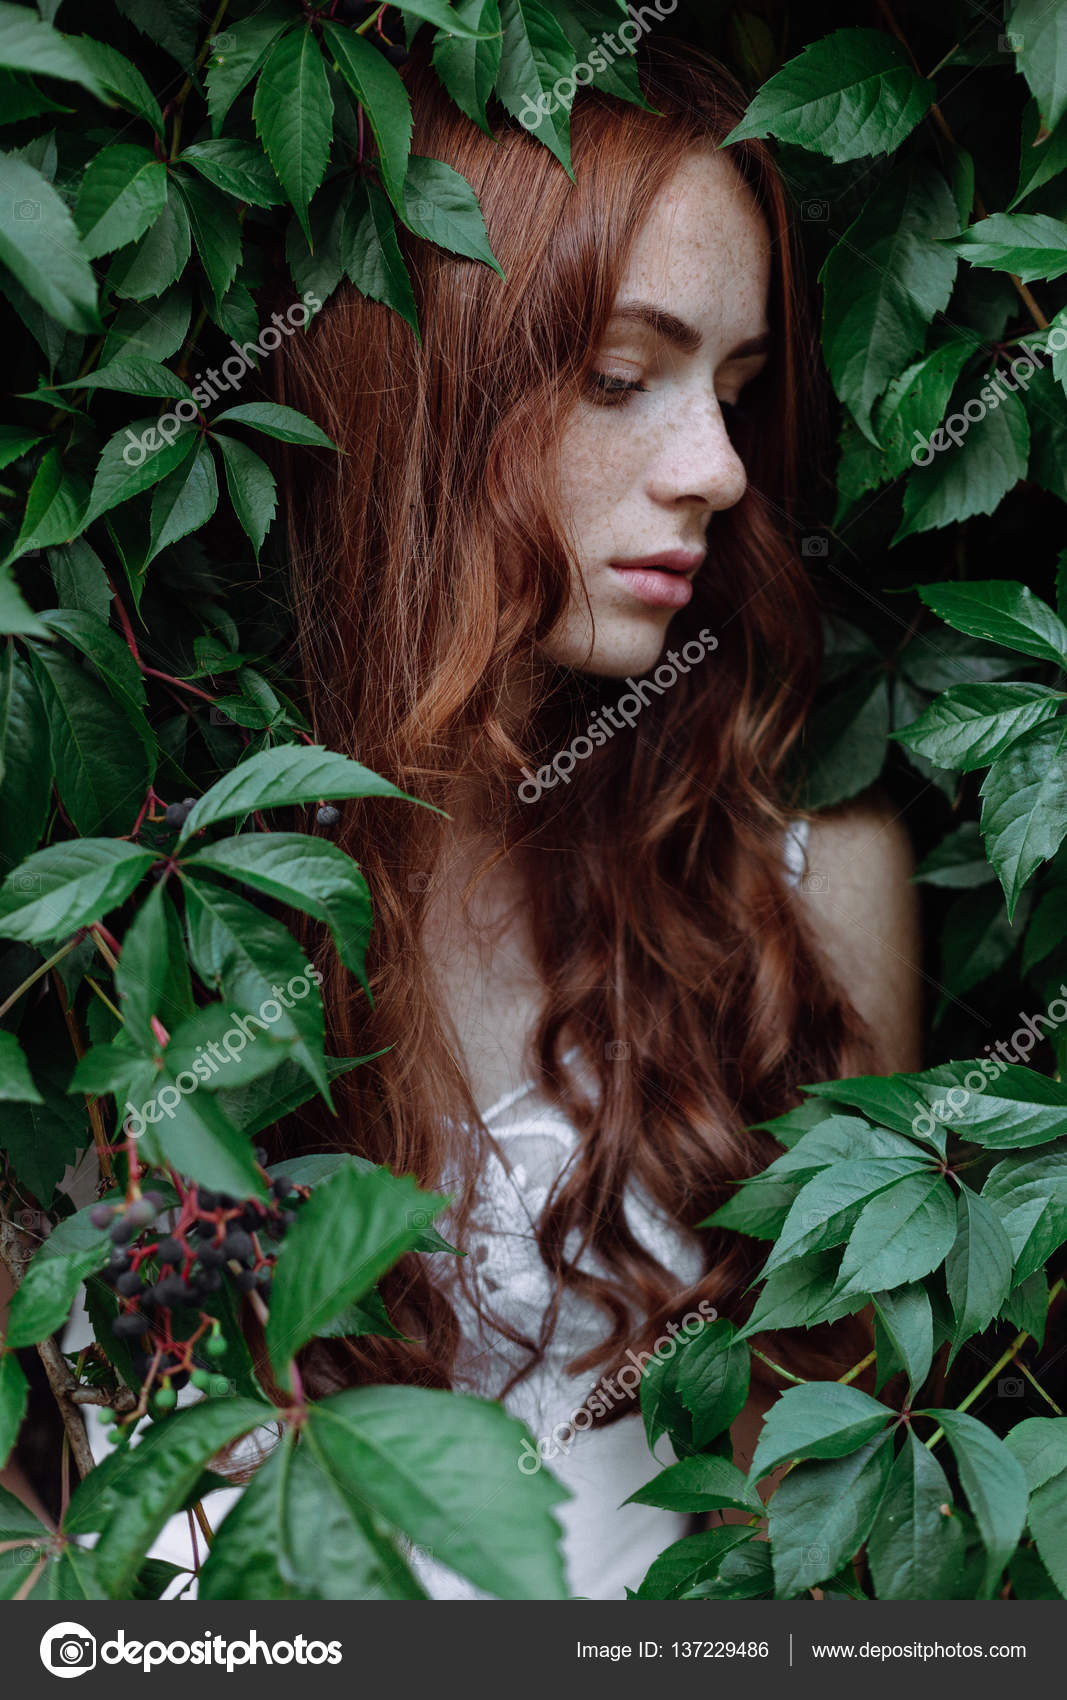 depositphotos_137229486-stock-photo-beautiful-girl-with-red-hair.jpg